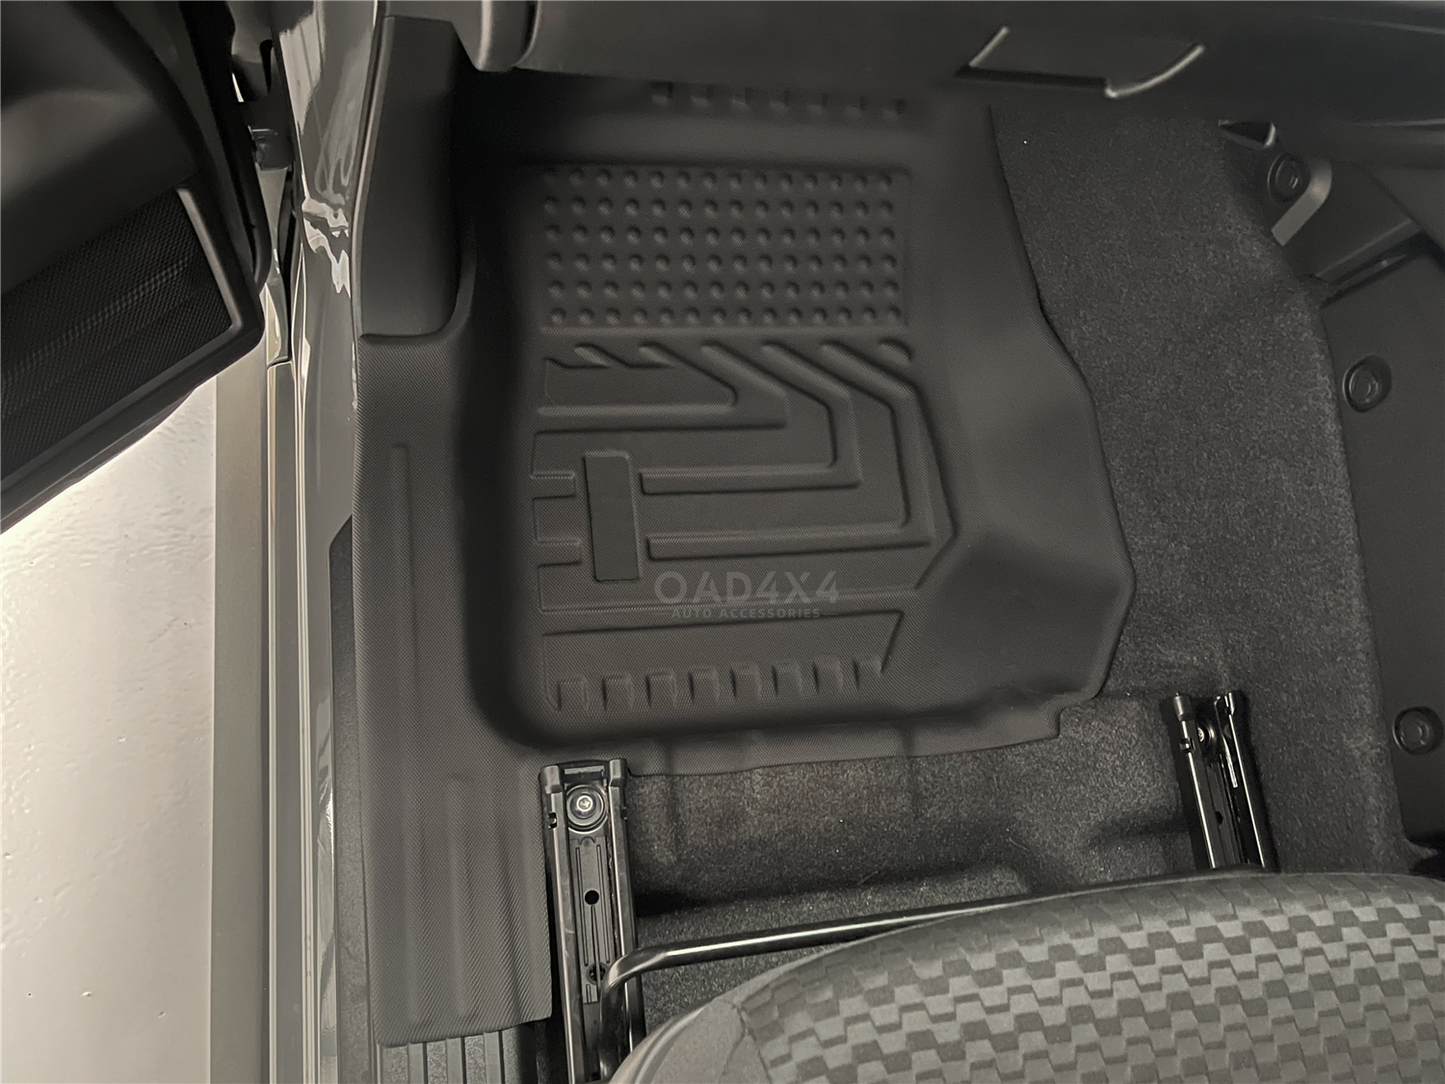 5D TPE Floor Mats for Suzuki Jimny 3 Doors Auto Transmission 2018-Onwards Door Sill Covered Car Mats Liner